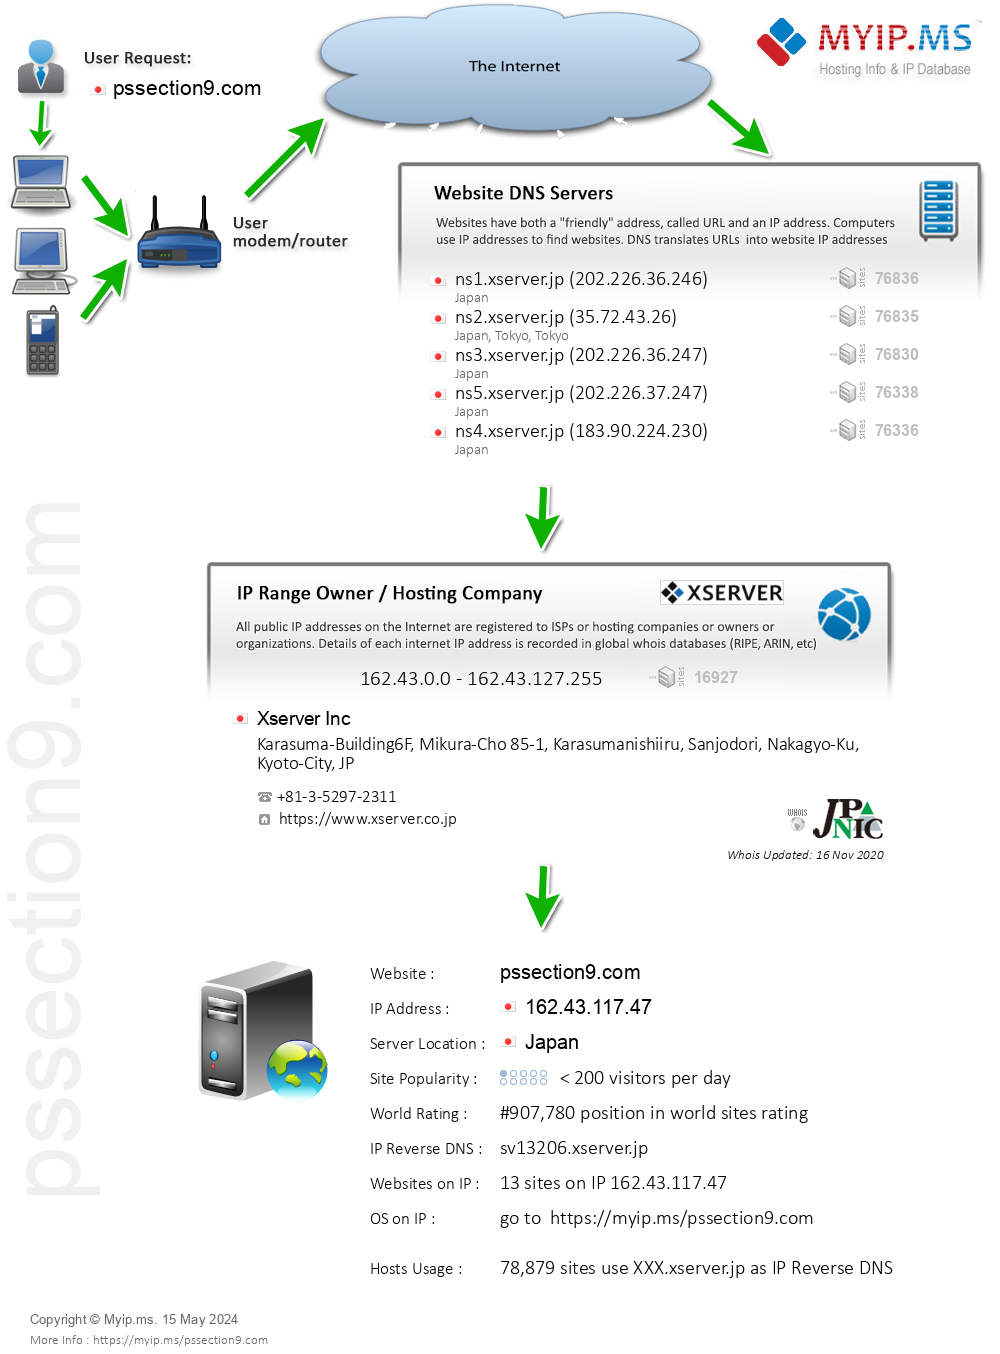 Pssection9.com - Website Hosting Visual IP Diagram